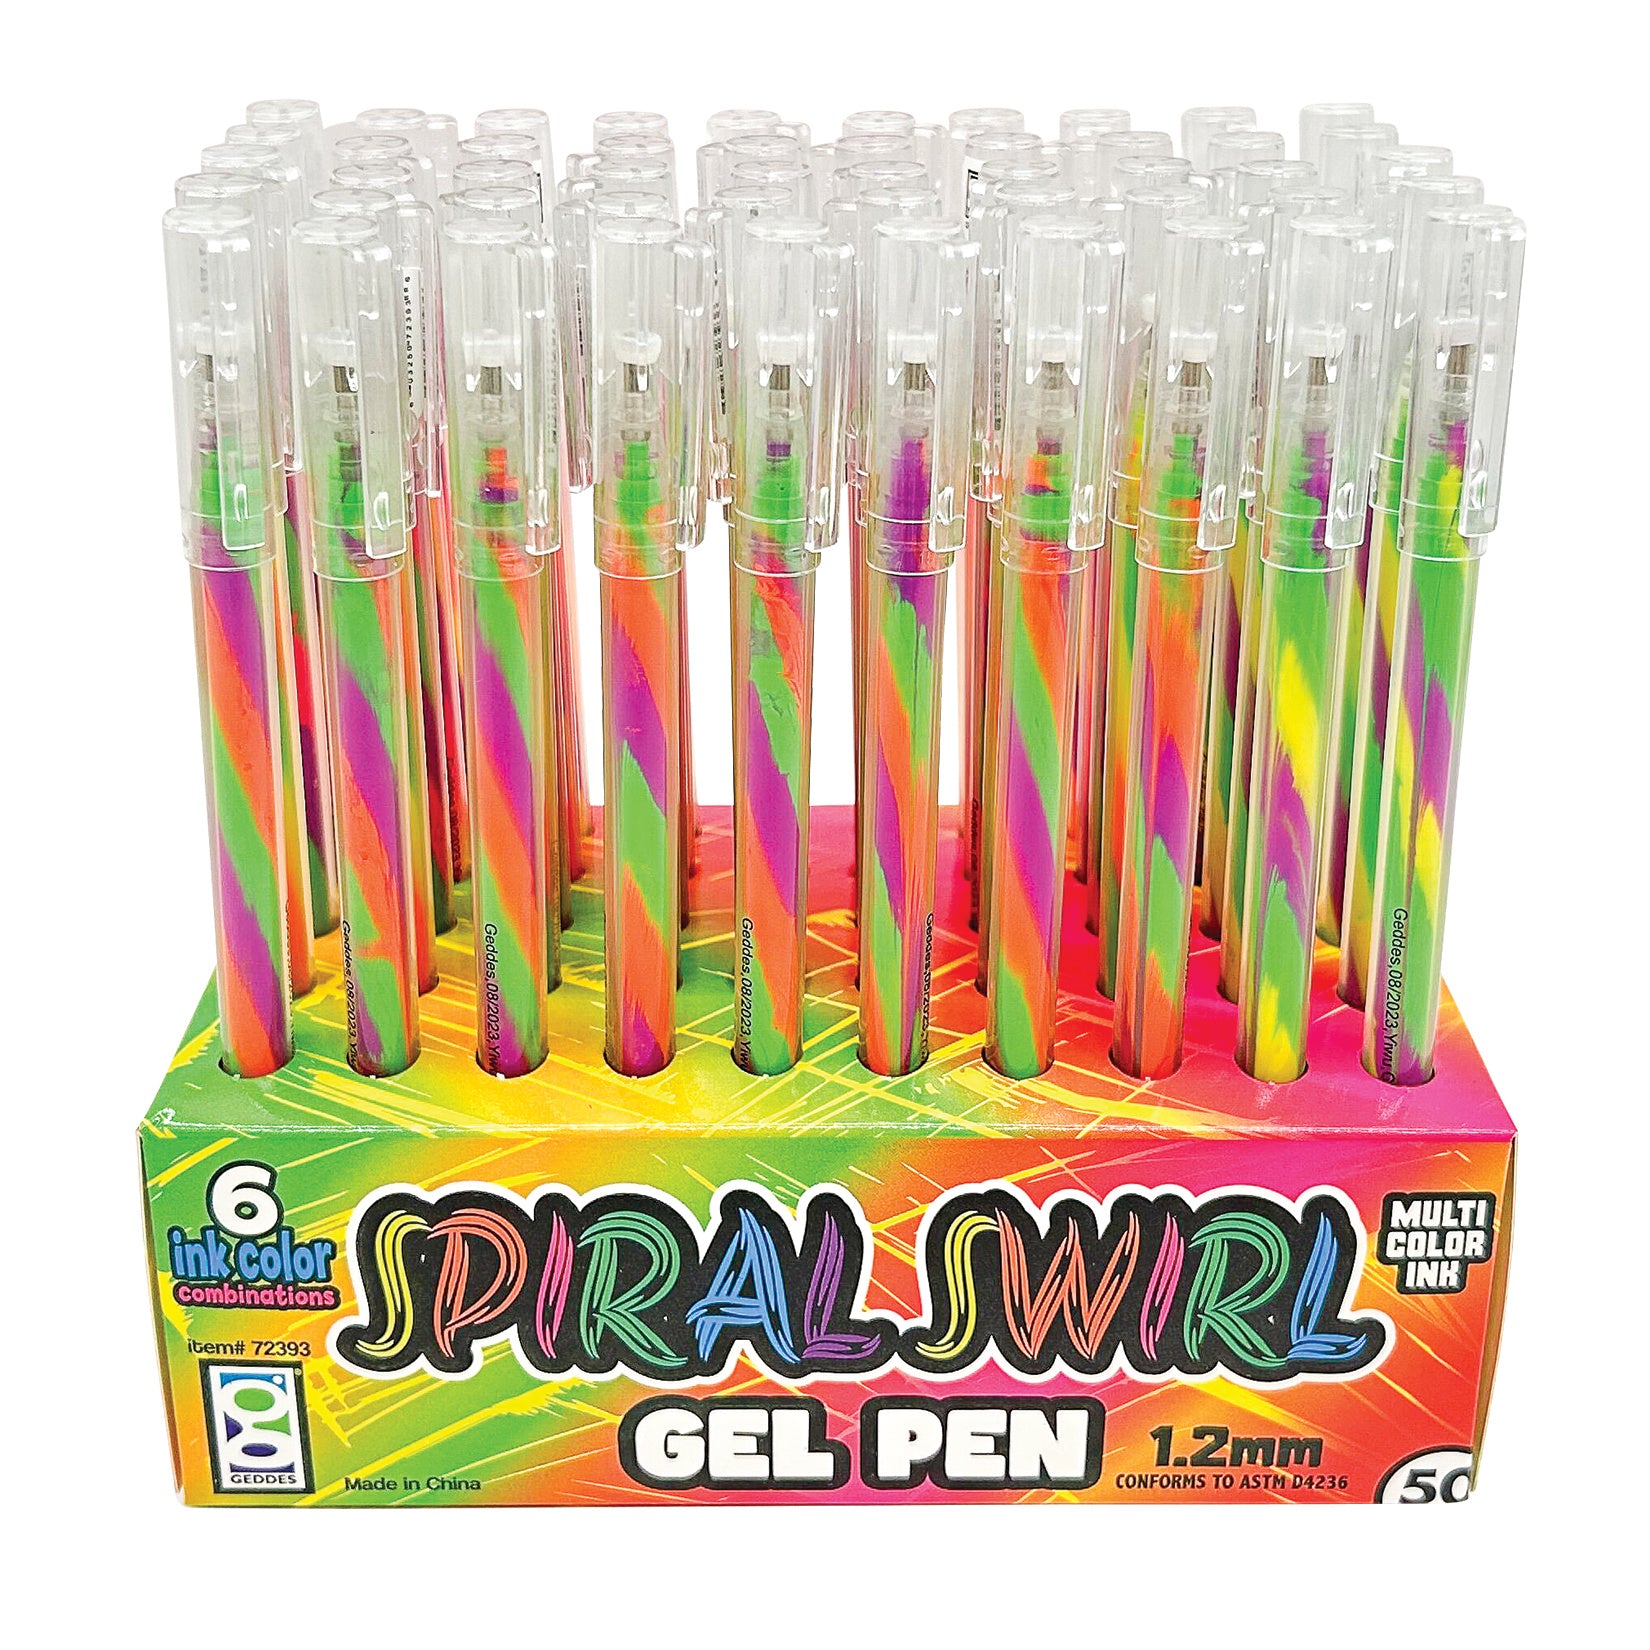 Spiral Swirl Gel Pens